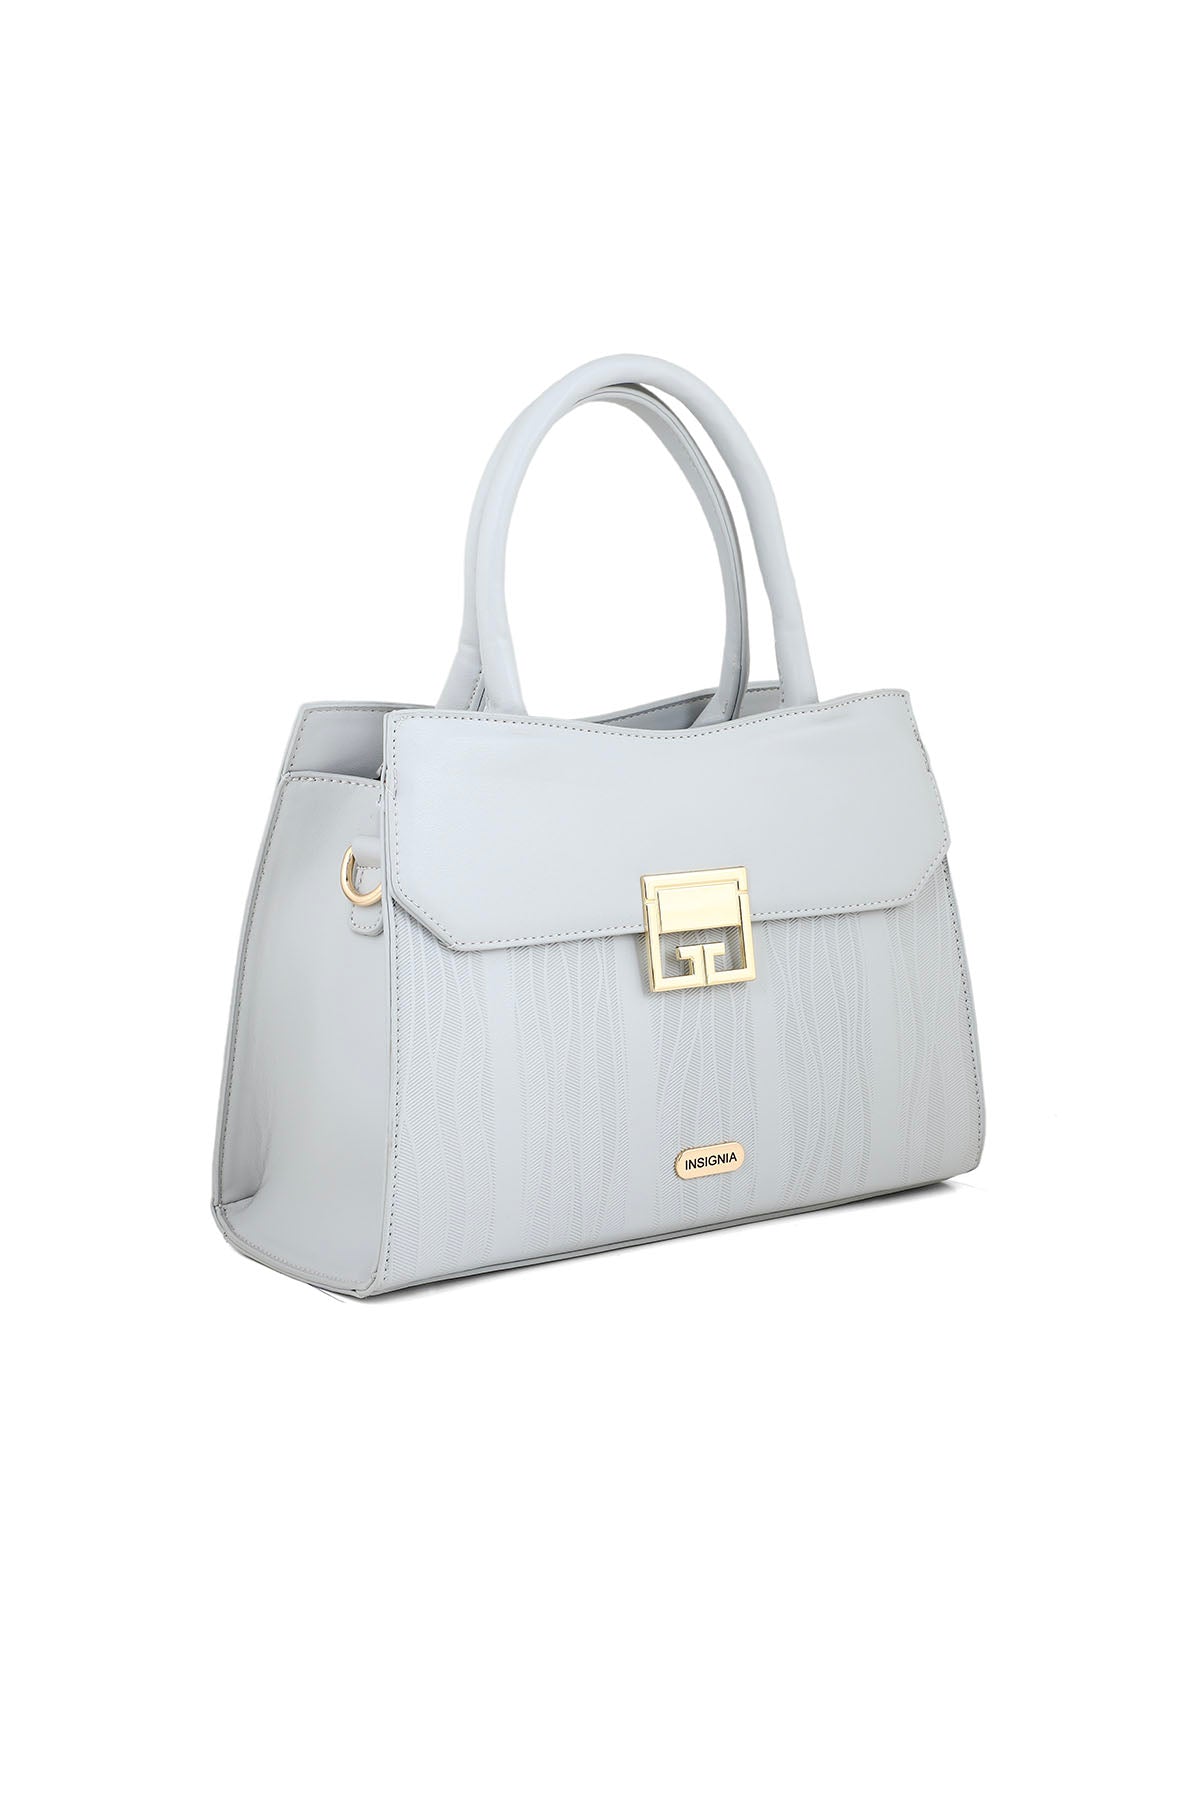 Top Handle Hand Bags B15132-Grey